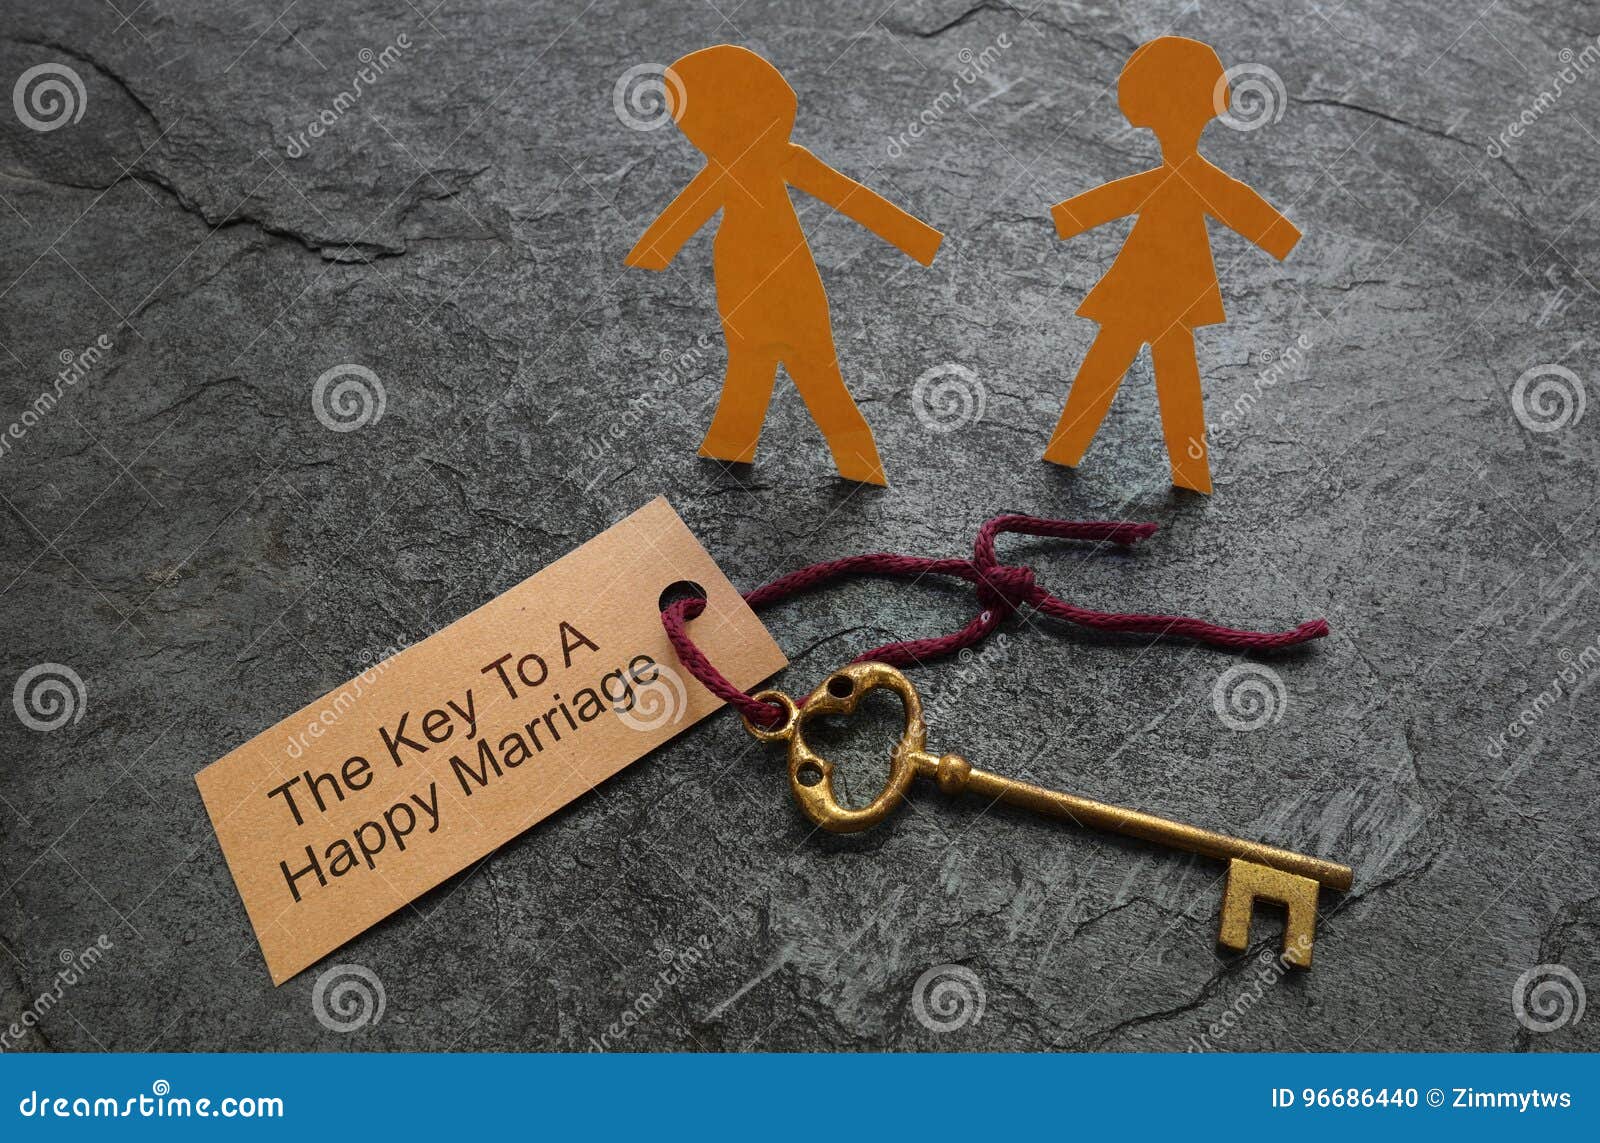 key to happy marriage